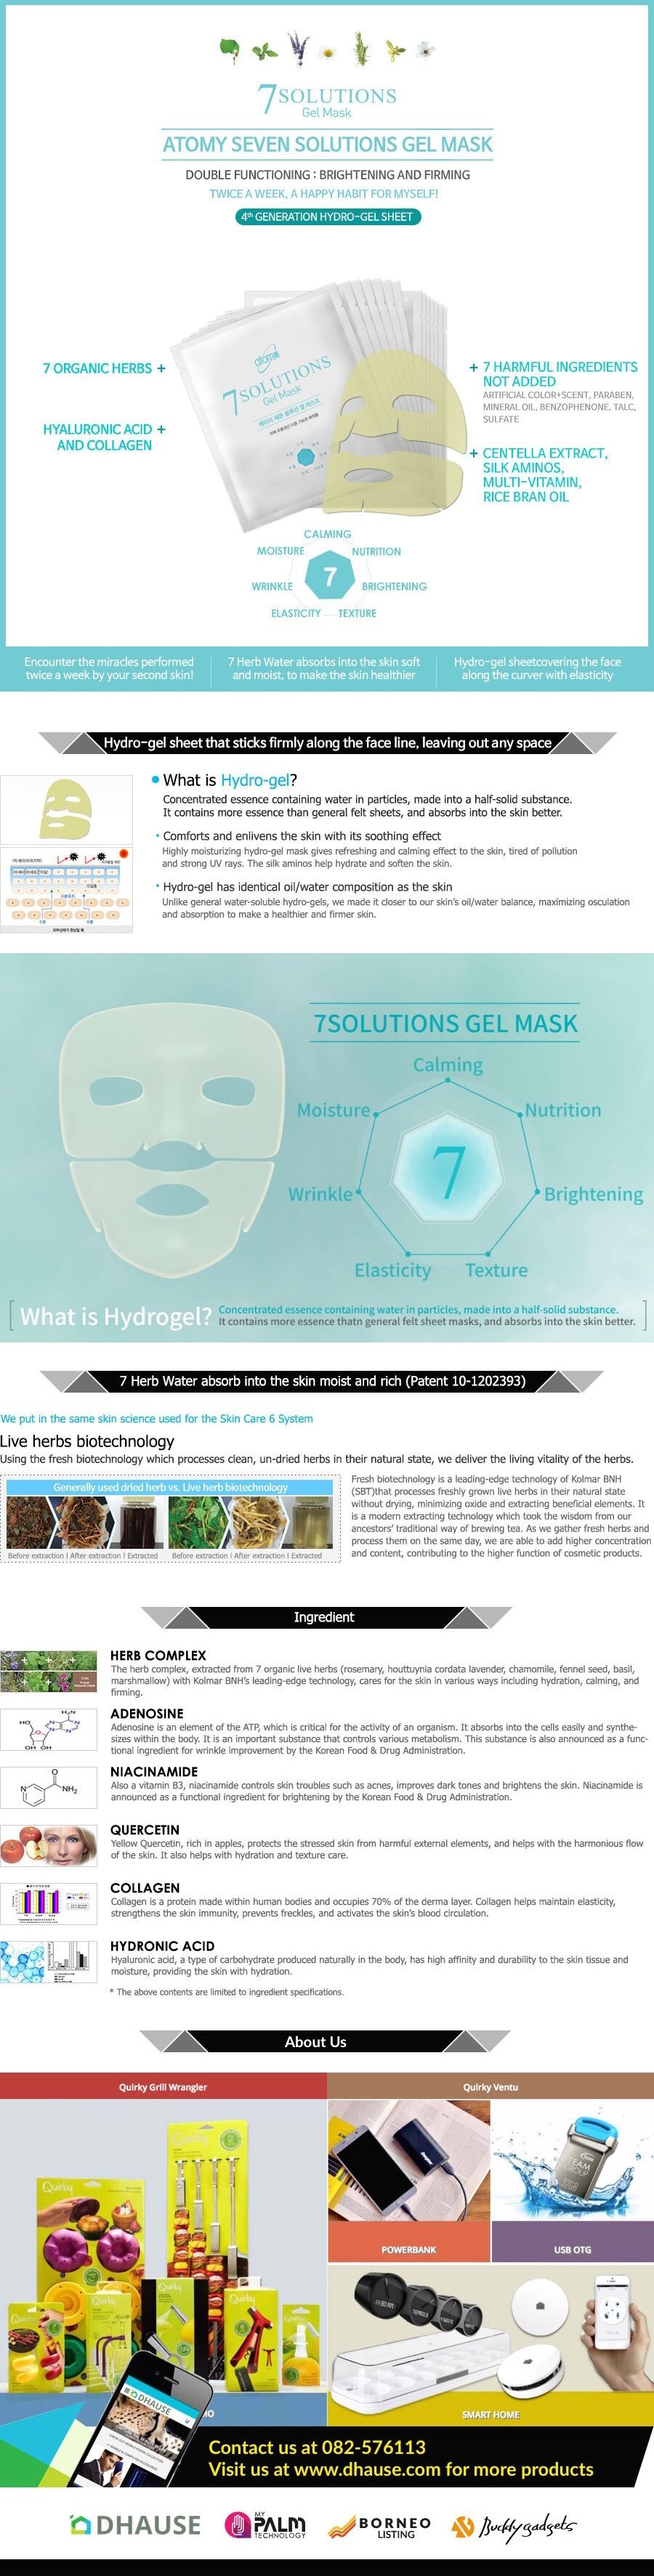 ATOMY 7 Solutions Gel Mask